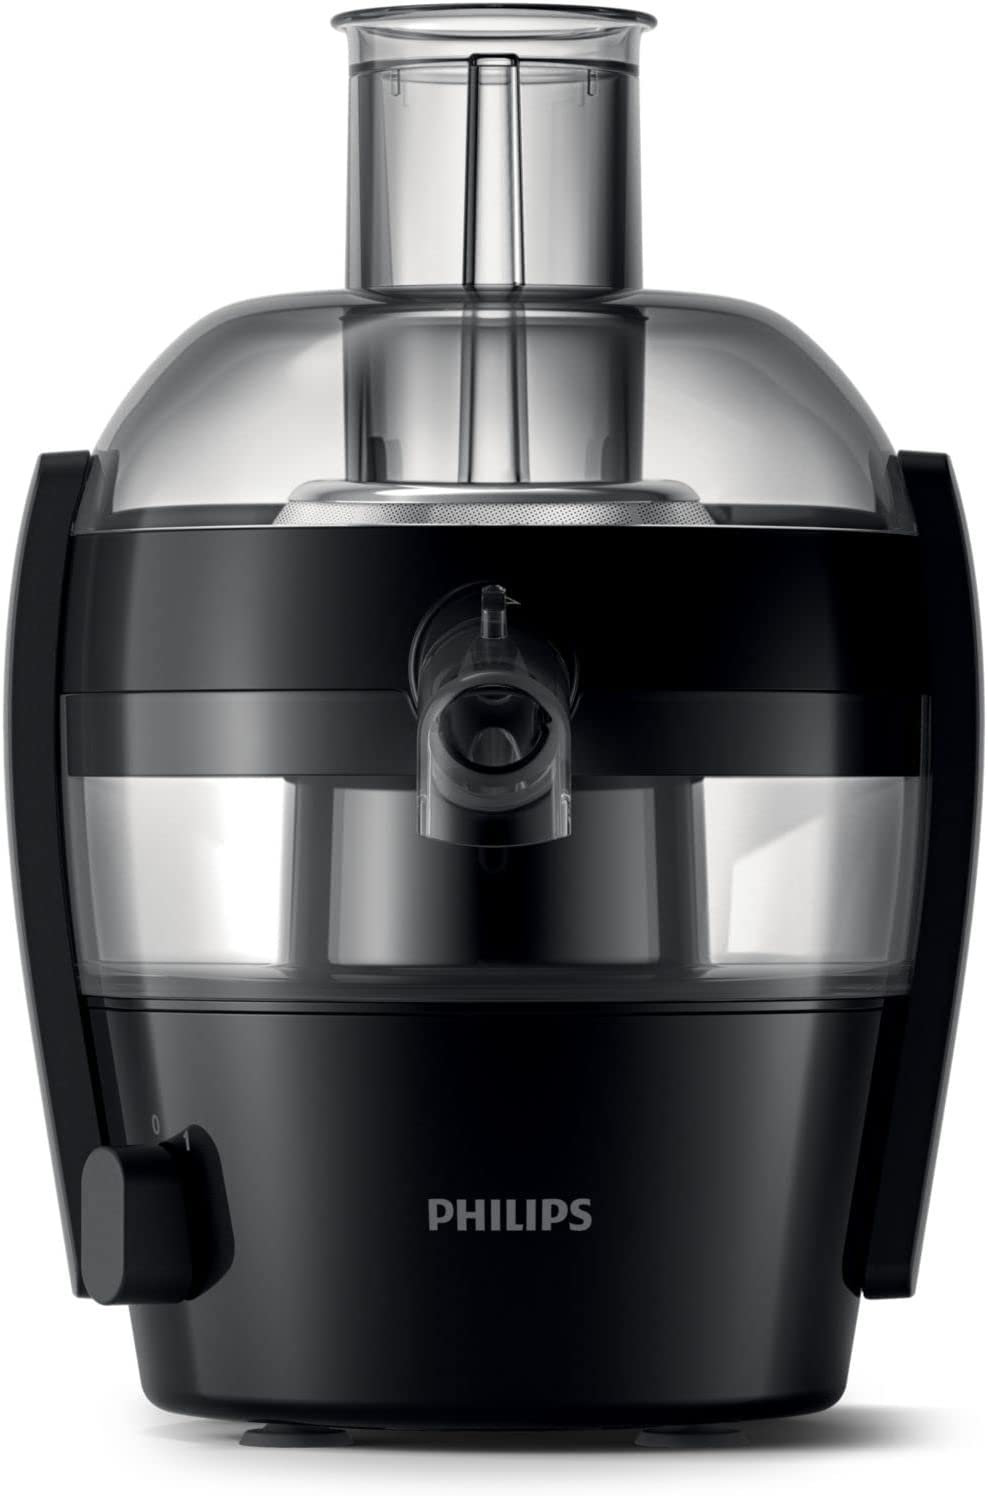 Philips Domestic Appliances Philips Avance Collection HR1832/00 Juicer, 500 W, QuickClean, Drip Lock, Black